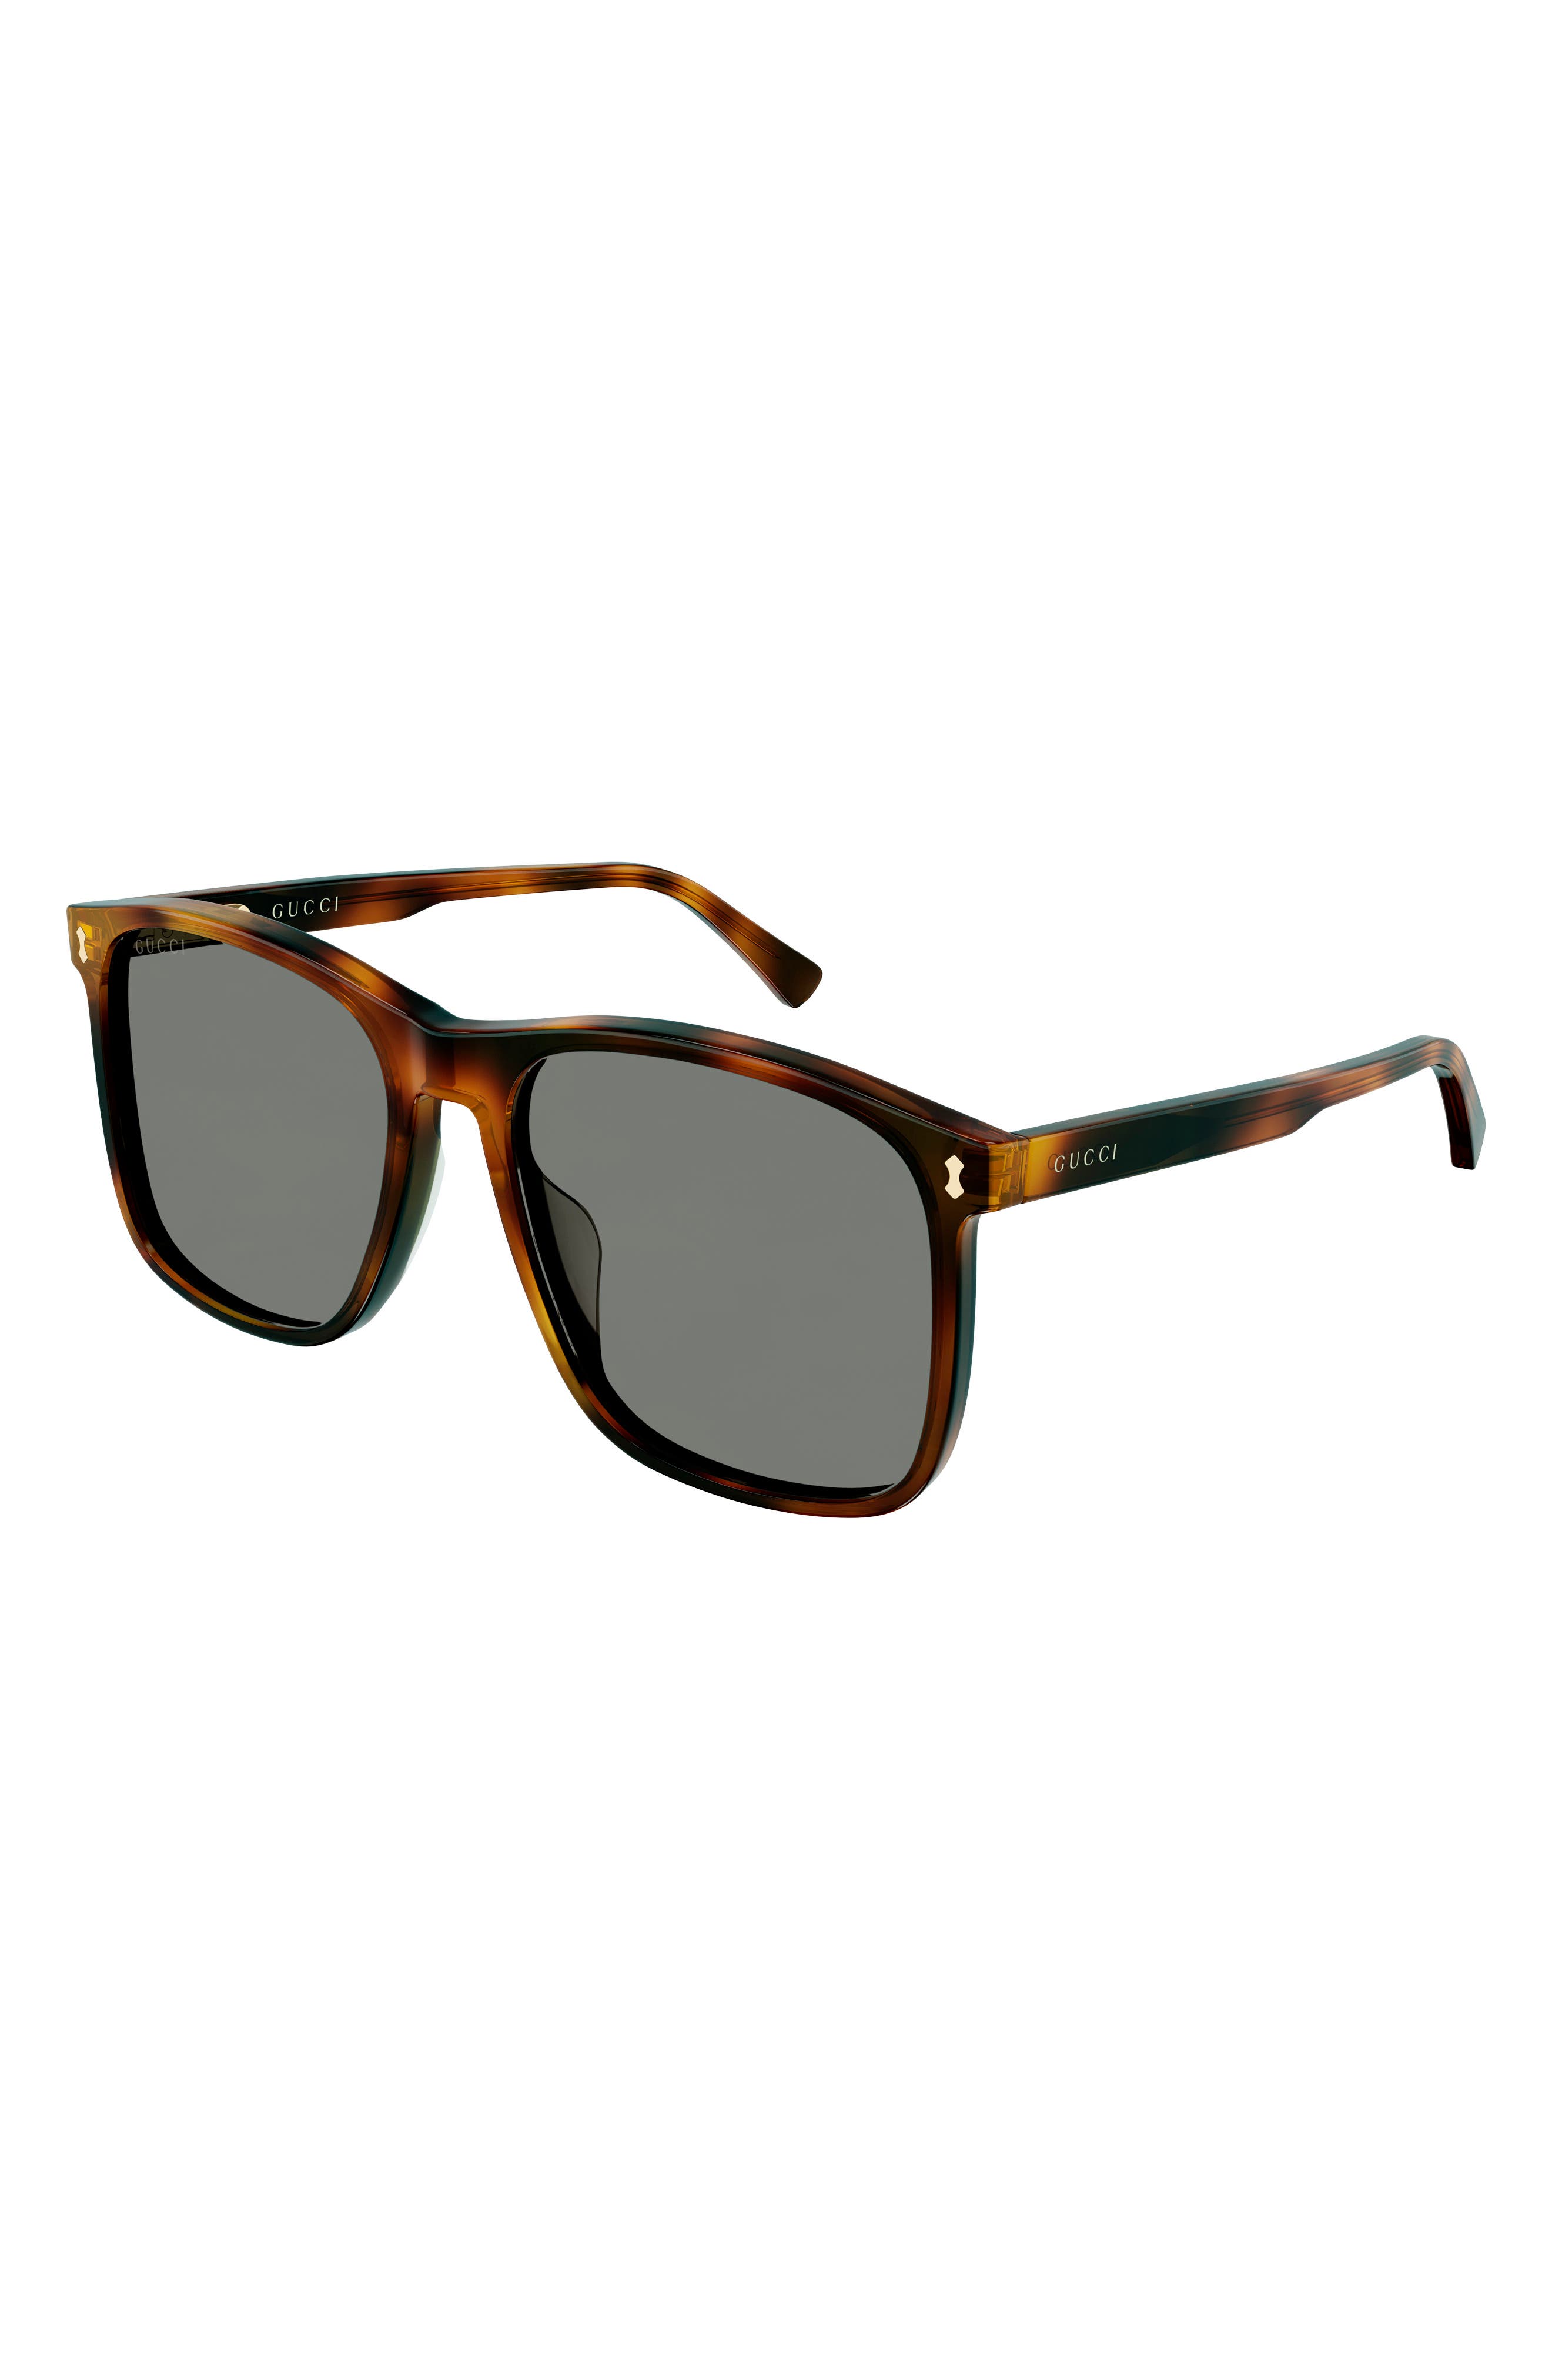 Gucci 57mm Square Sunglasses in Havana at Nordstrom